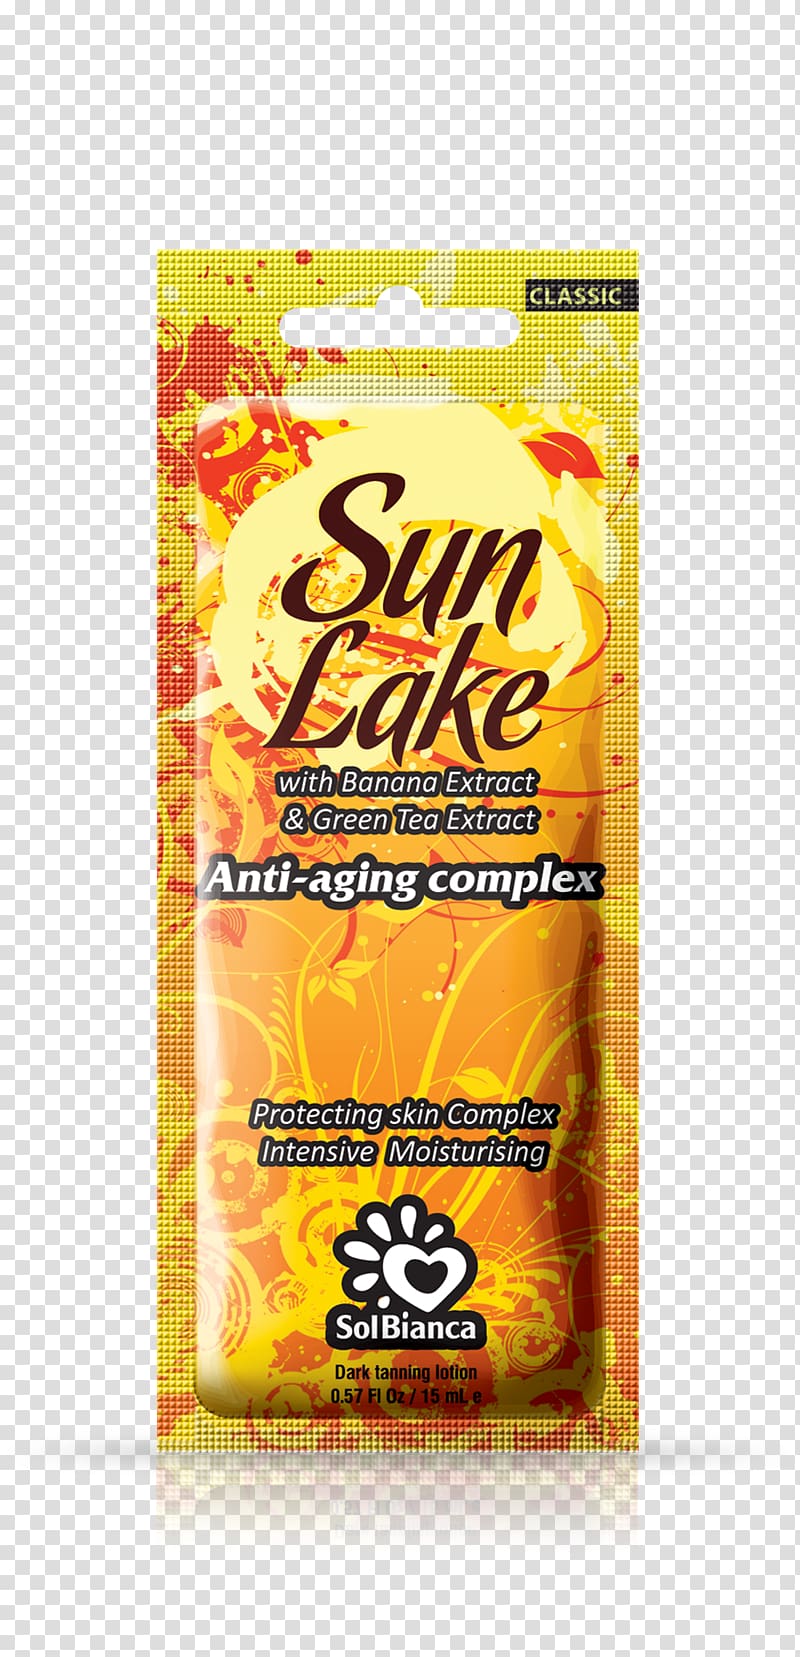 Sunscreen Sun tanning Cosmetics Cream Extract, sun block transparent background PNG clipart